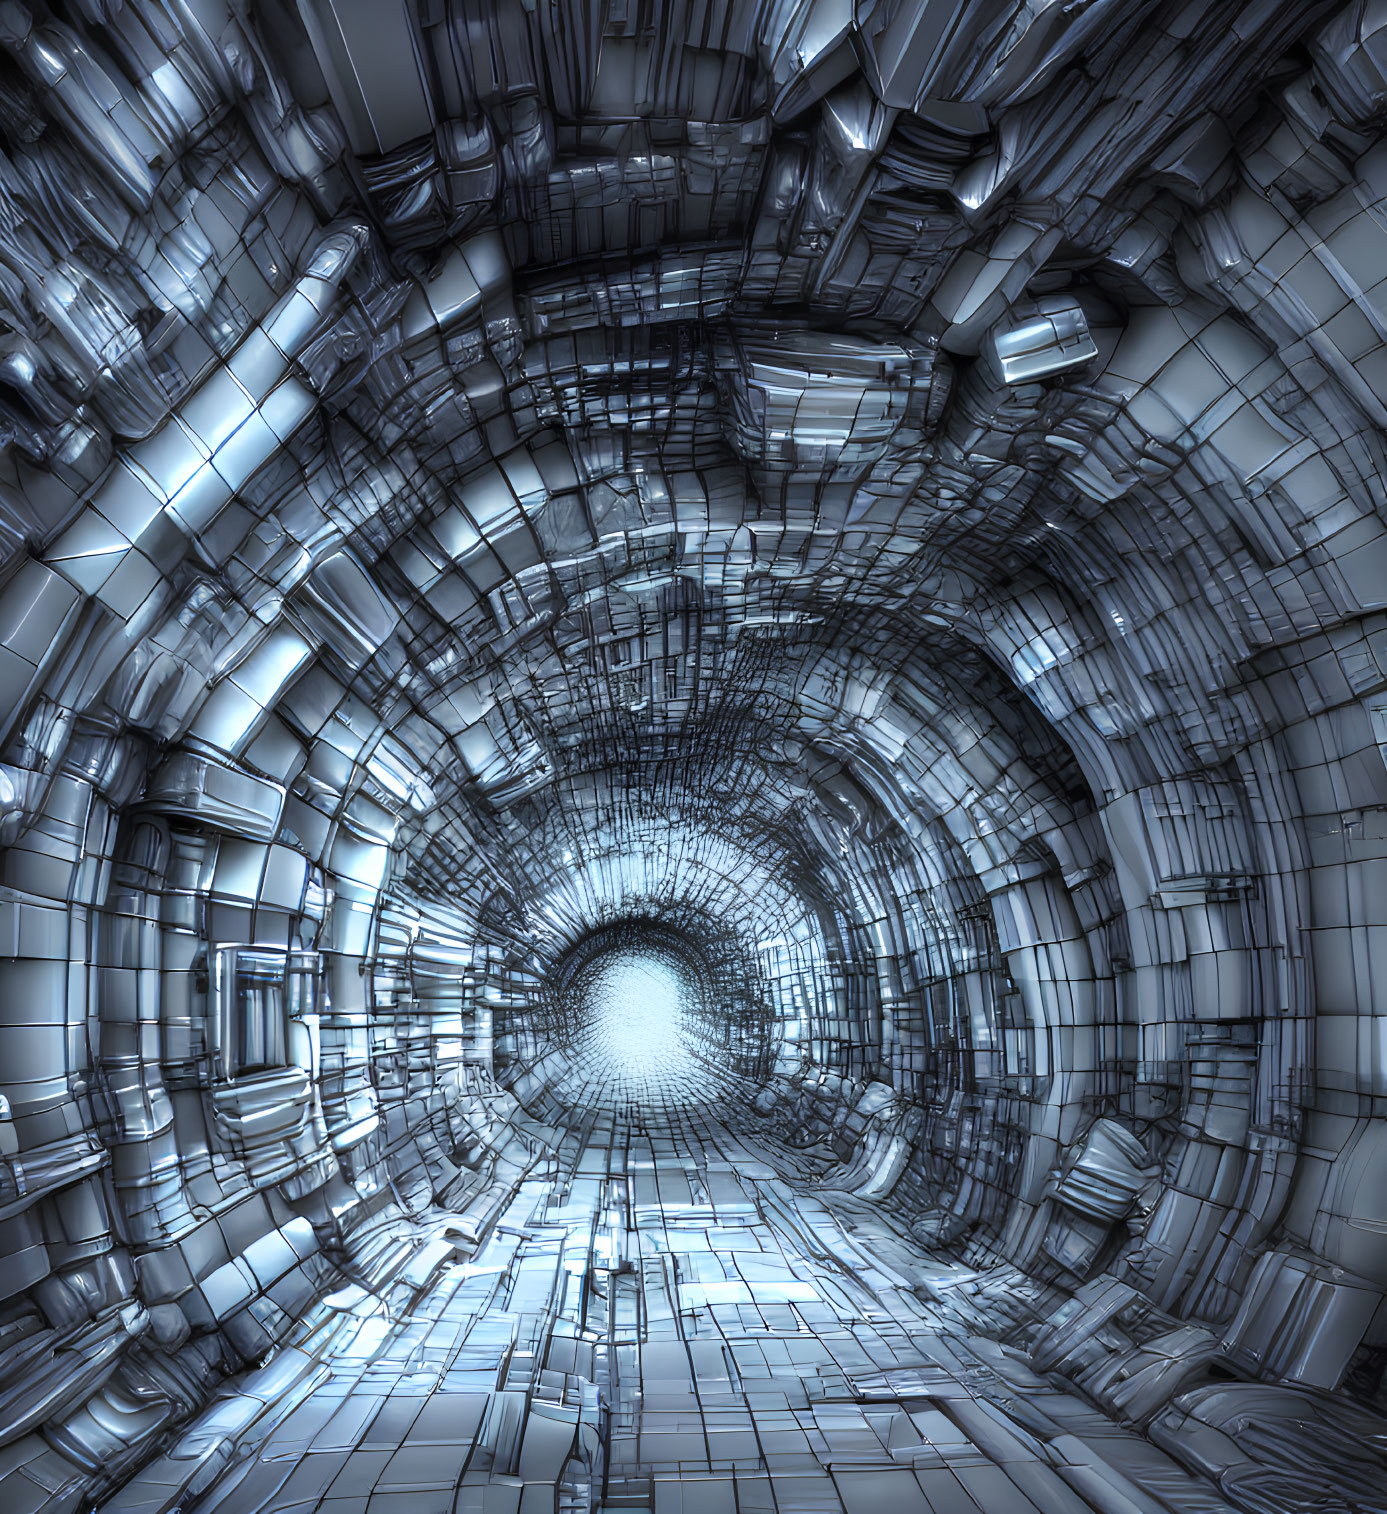 Futuristic metallic tunnel with geometric patterns and bright light